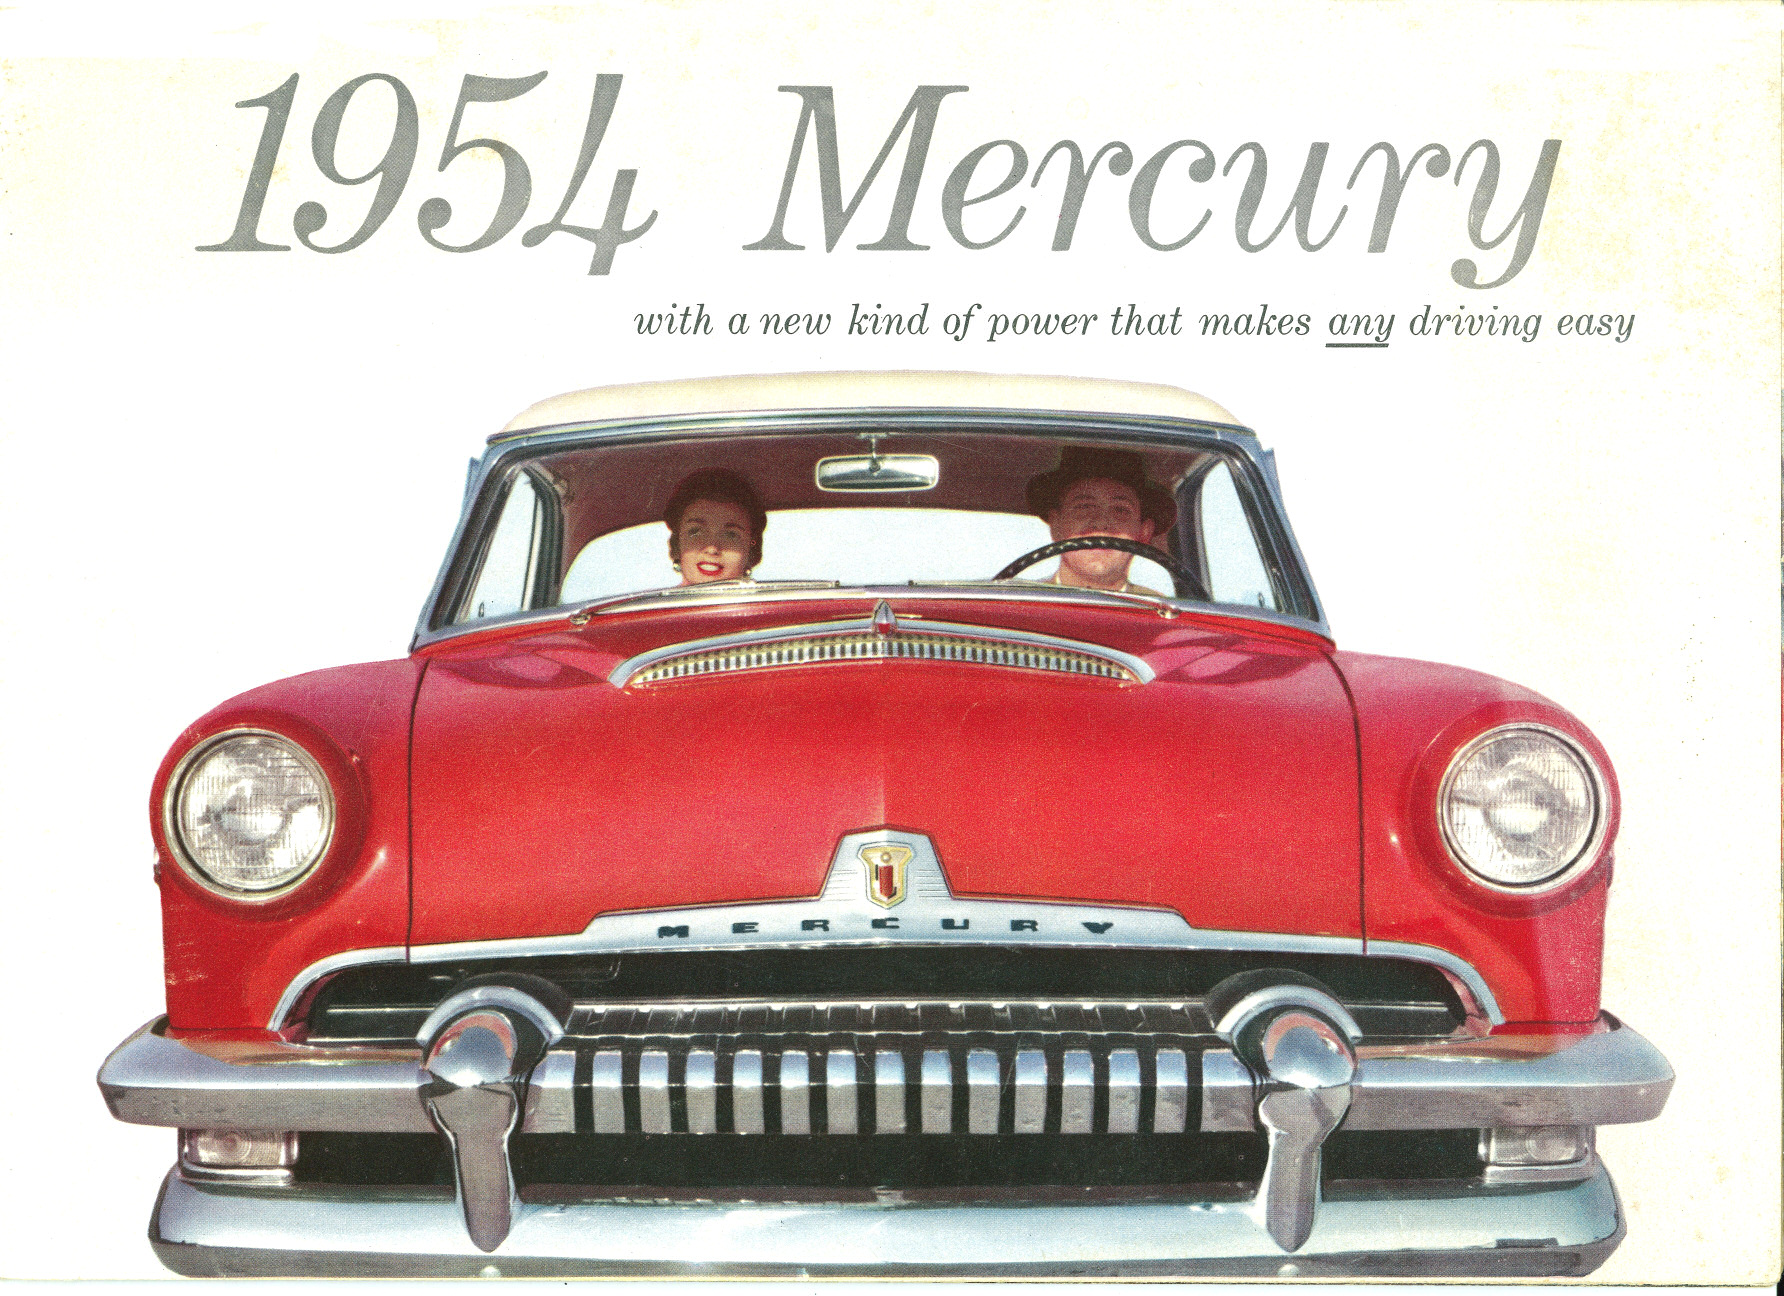 1954_Mercury_Deluxe_Foldout-01